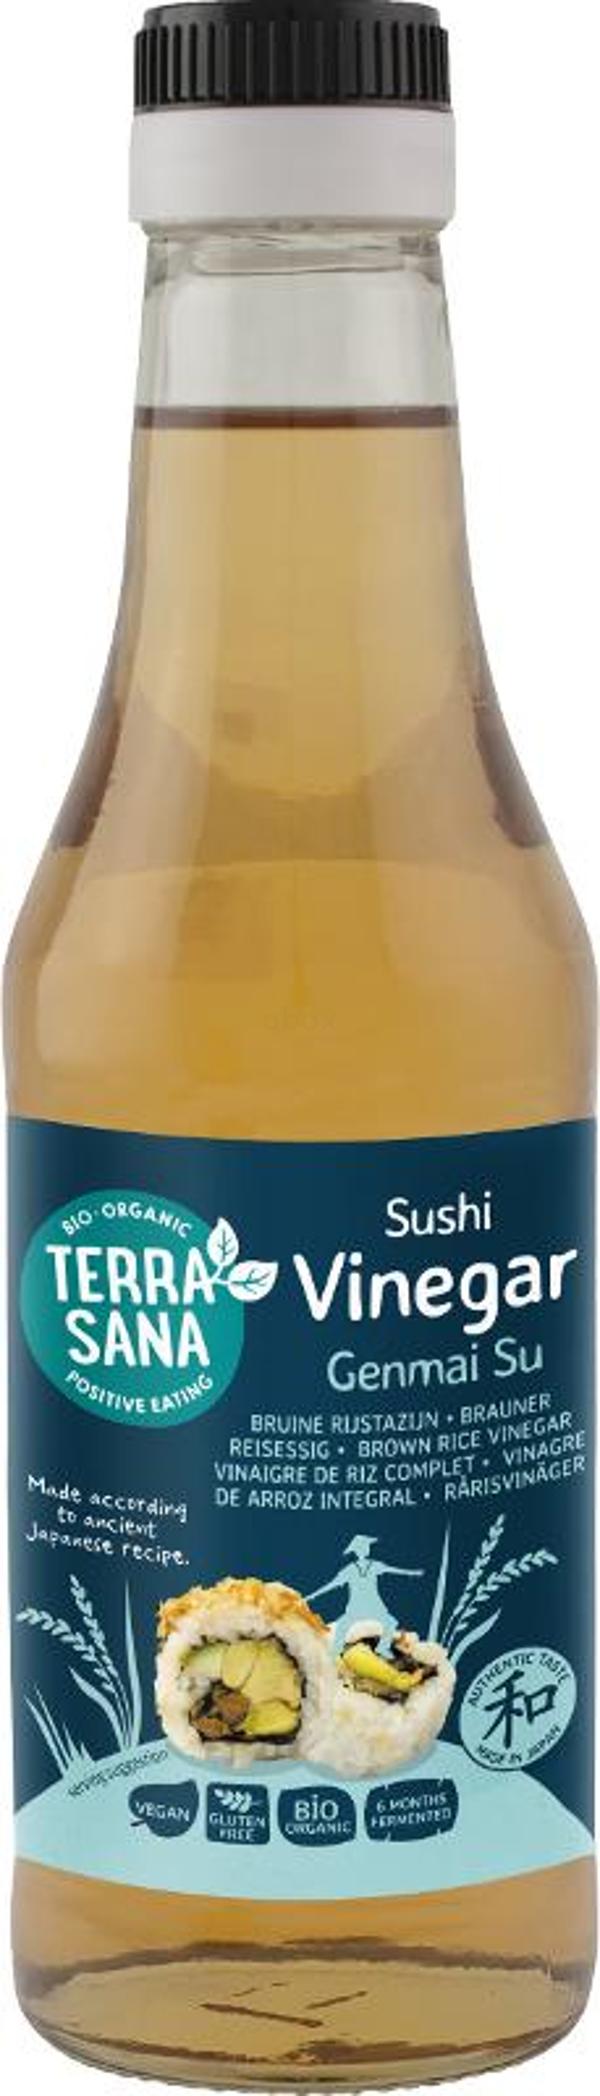 Produktfoto zu TerraSana Genmai Su - Sushi-Essig - 250ml